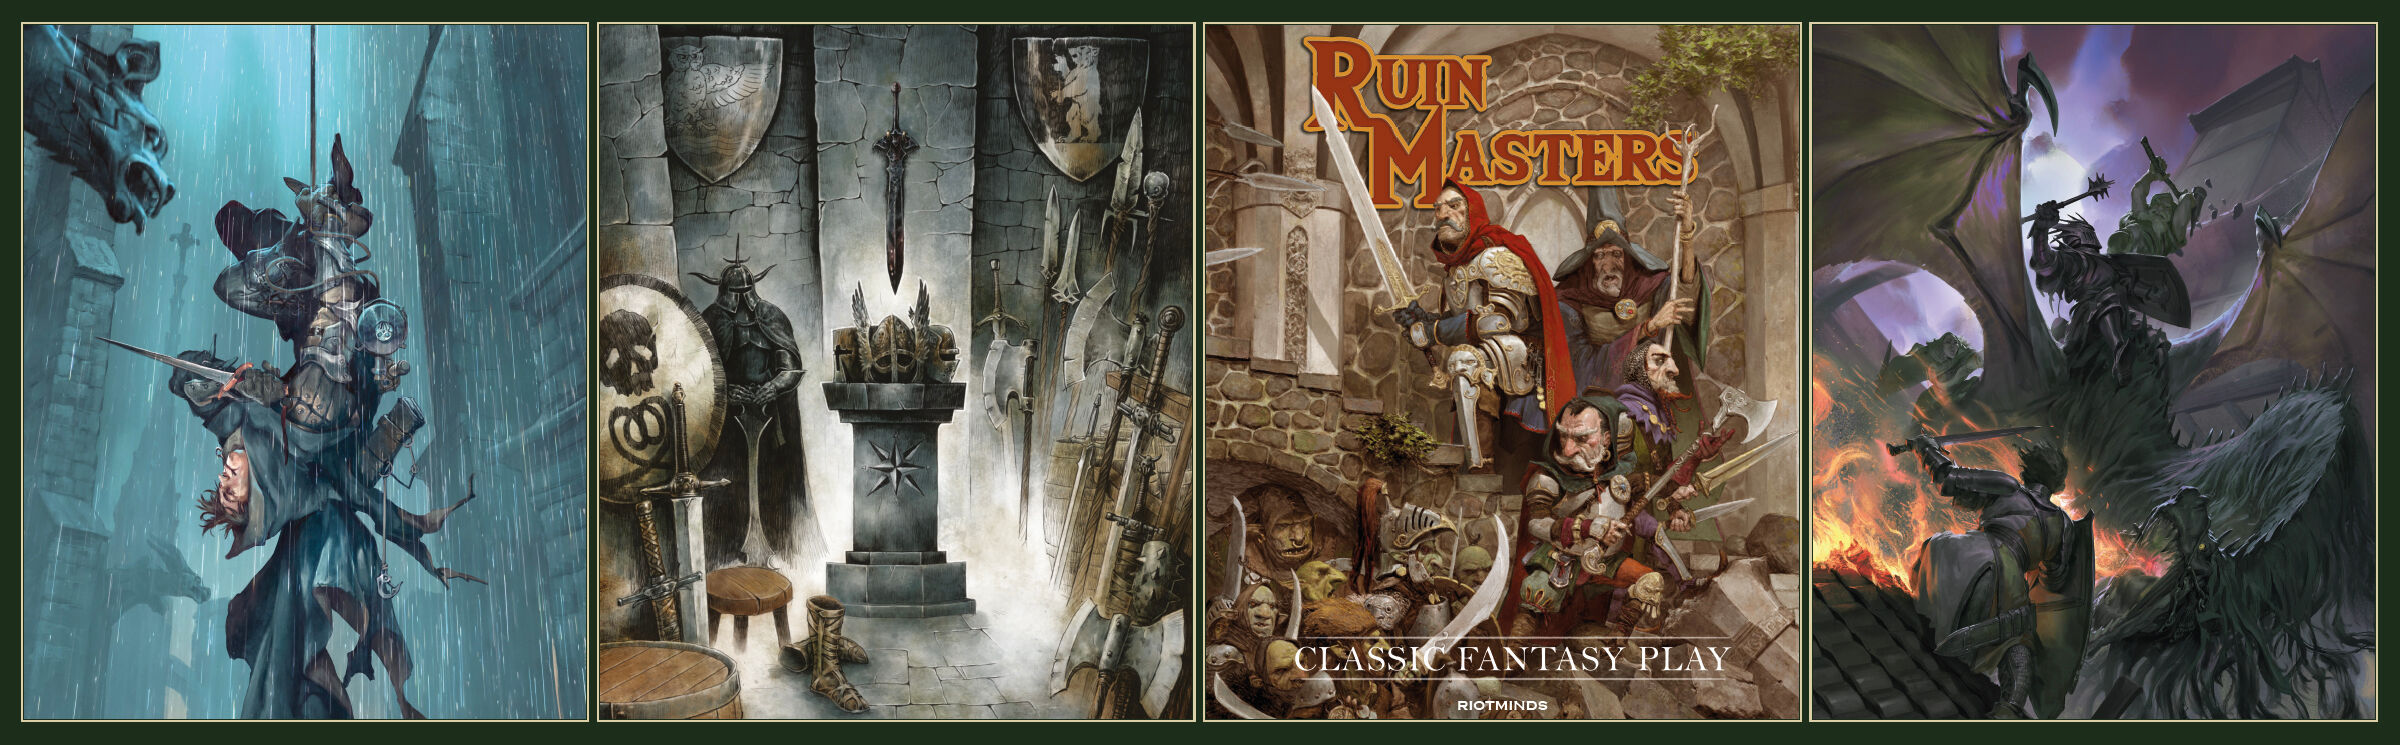 Ruin Masters RPG GM Screen Classic Fantasy Play